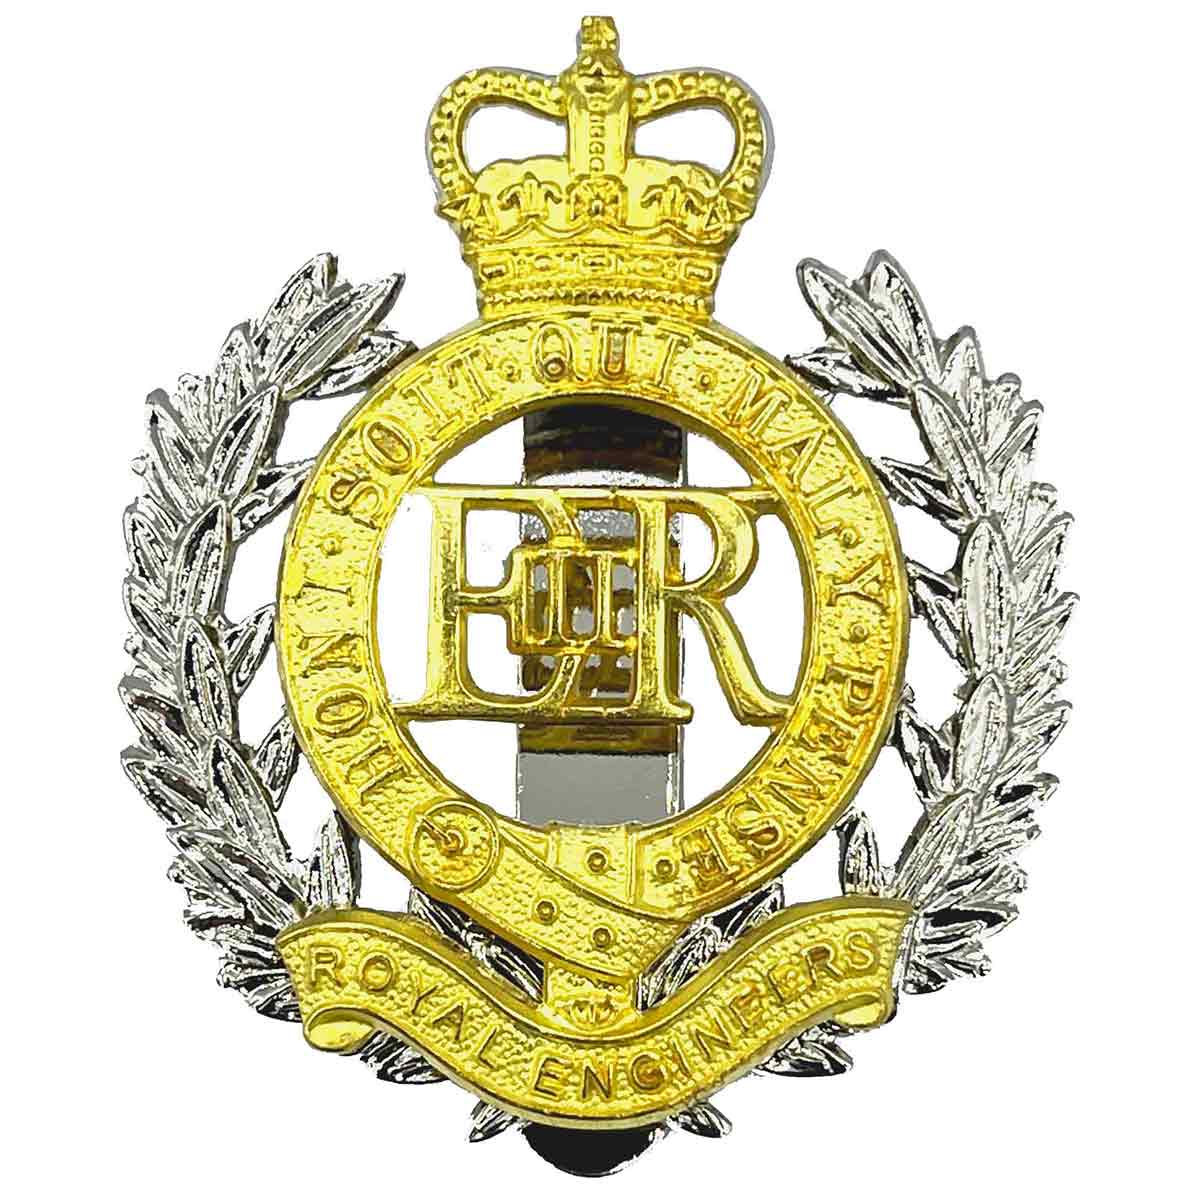 Royal Engineers Beret Cap Badge - John Bull Clothing